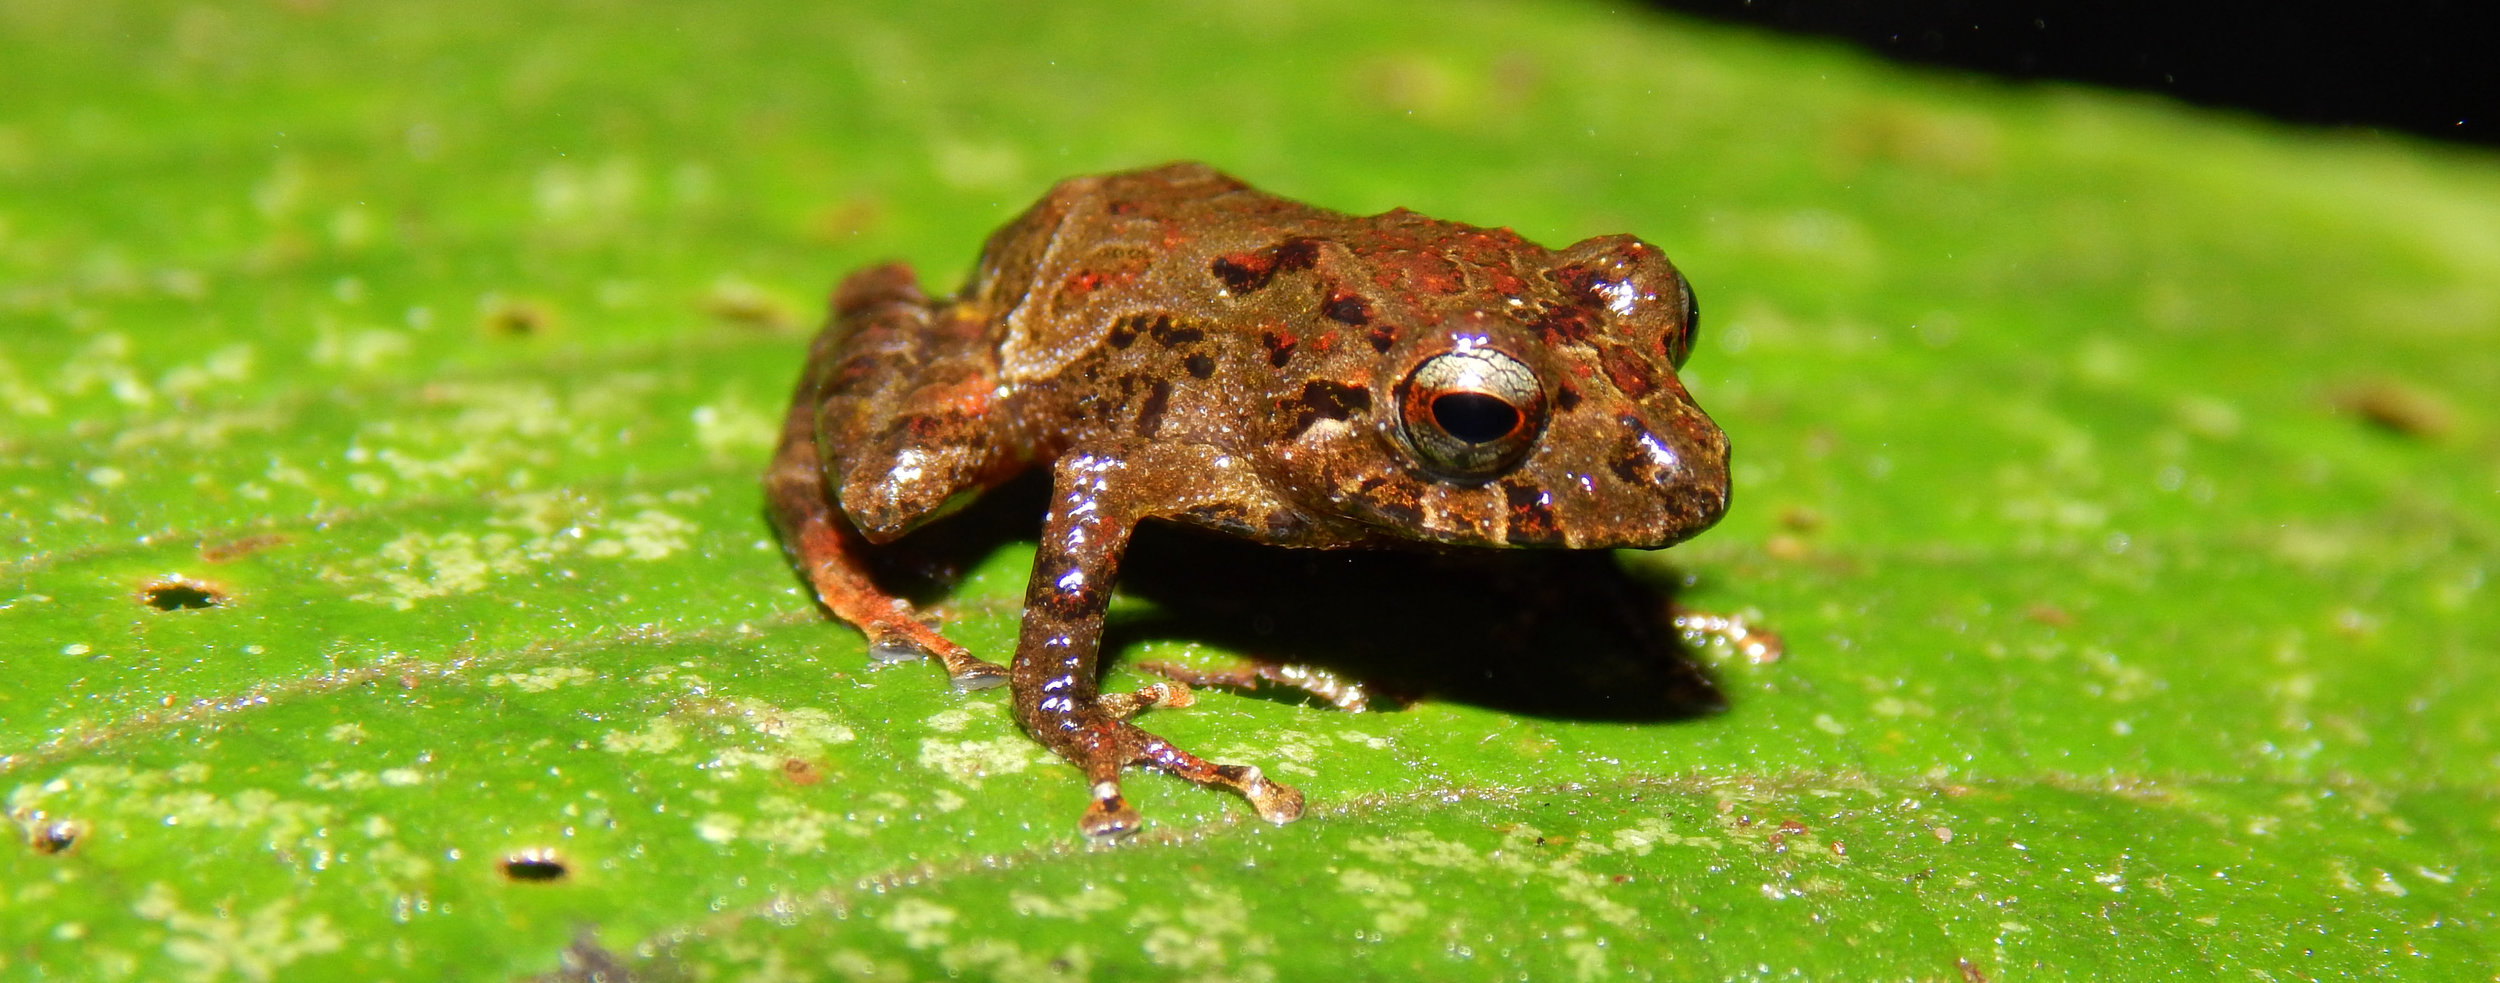 Pristimantis sp - potential new species of Rain Frog .jpg